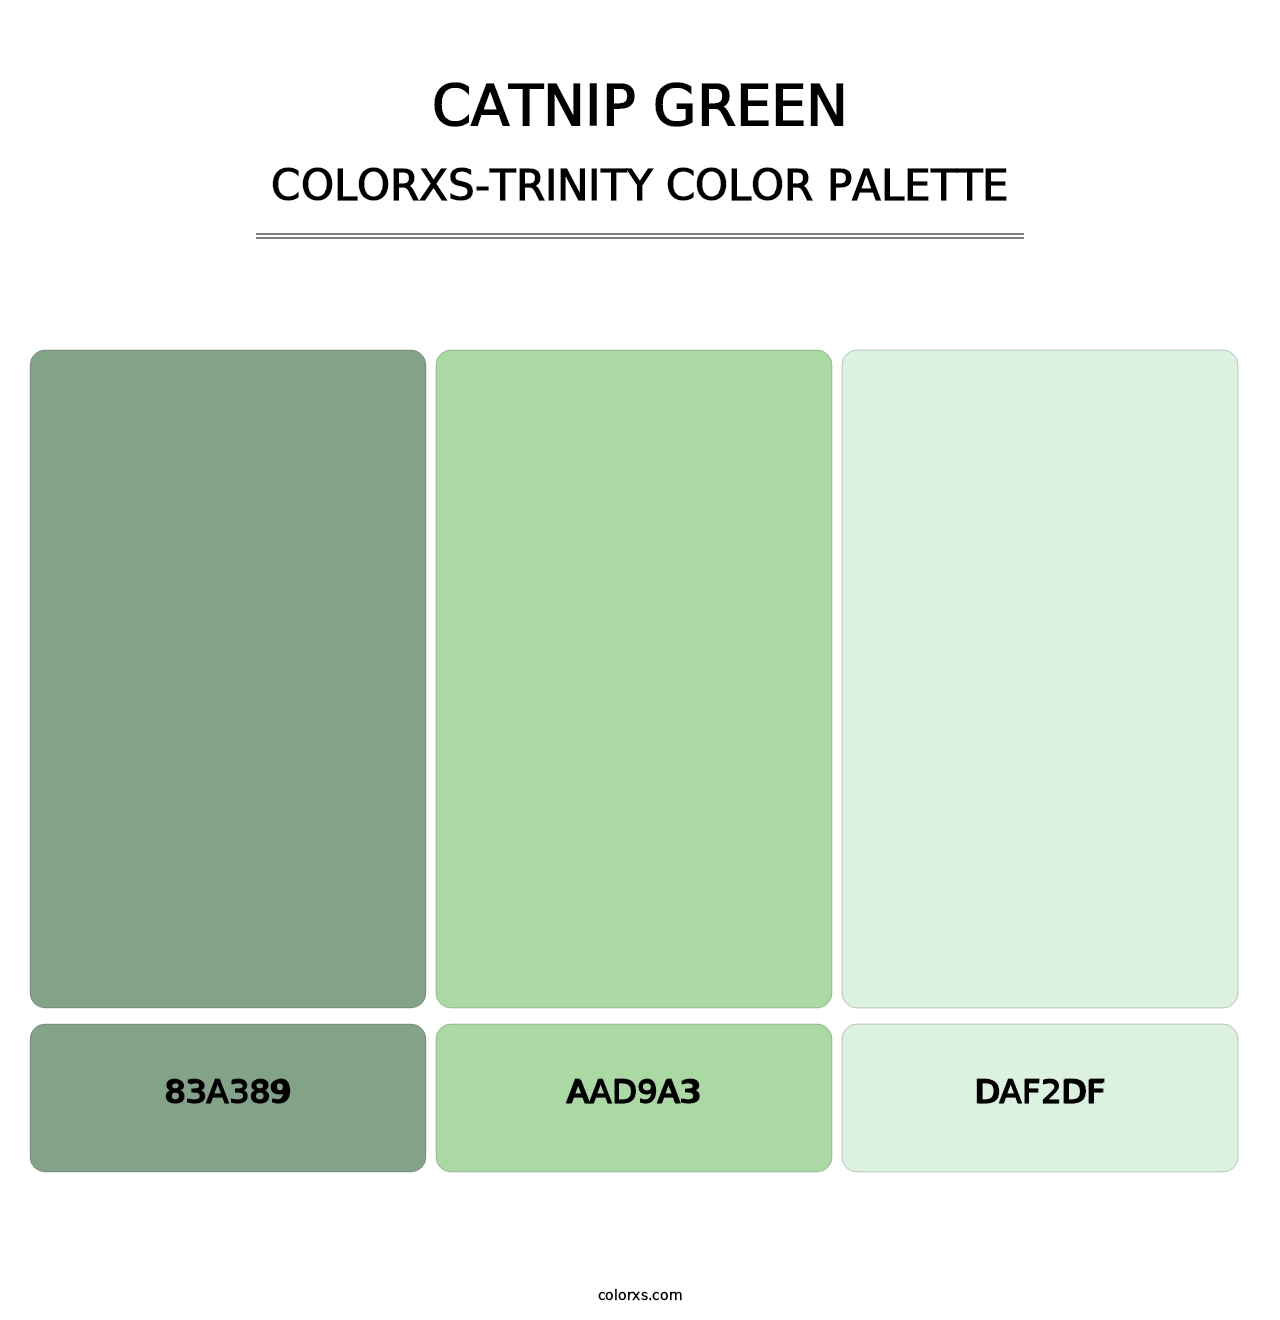 Catnip Green - Colorxs Trinity Palette